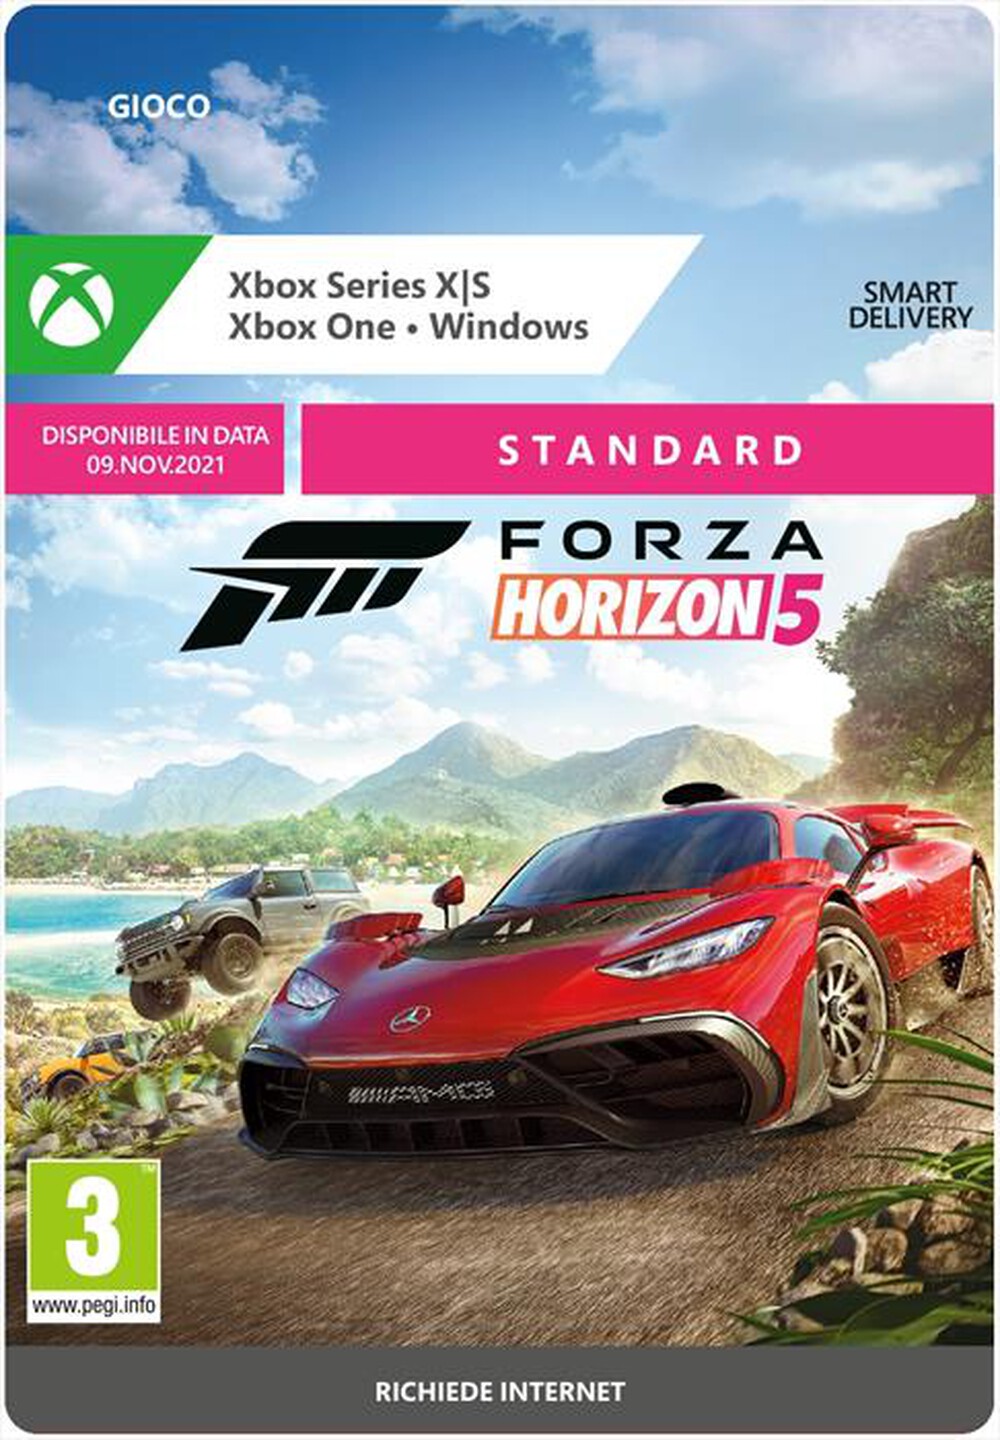 "MICROSOFT - Forza Horizon5 Standard Edition"